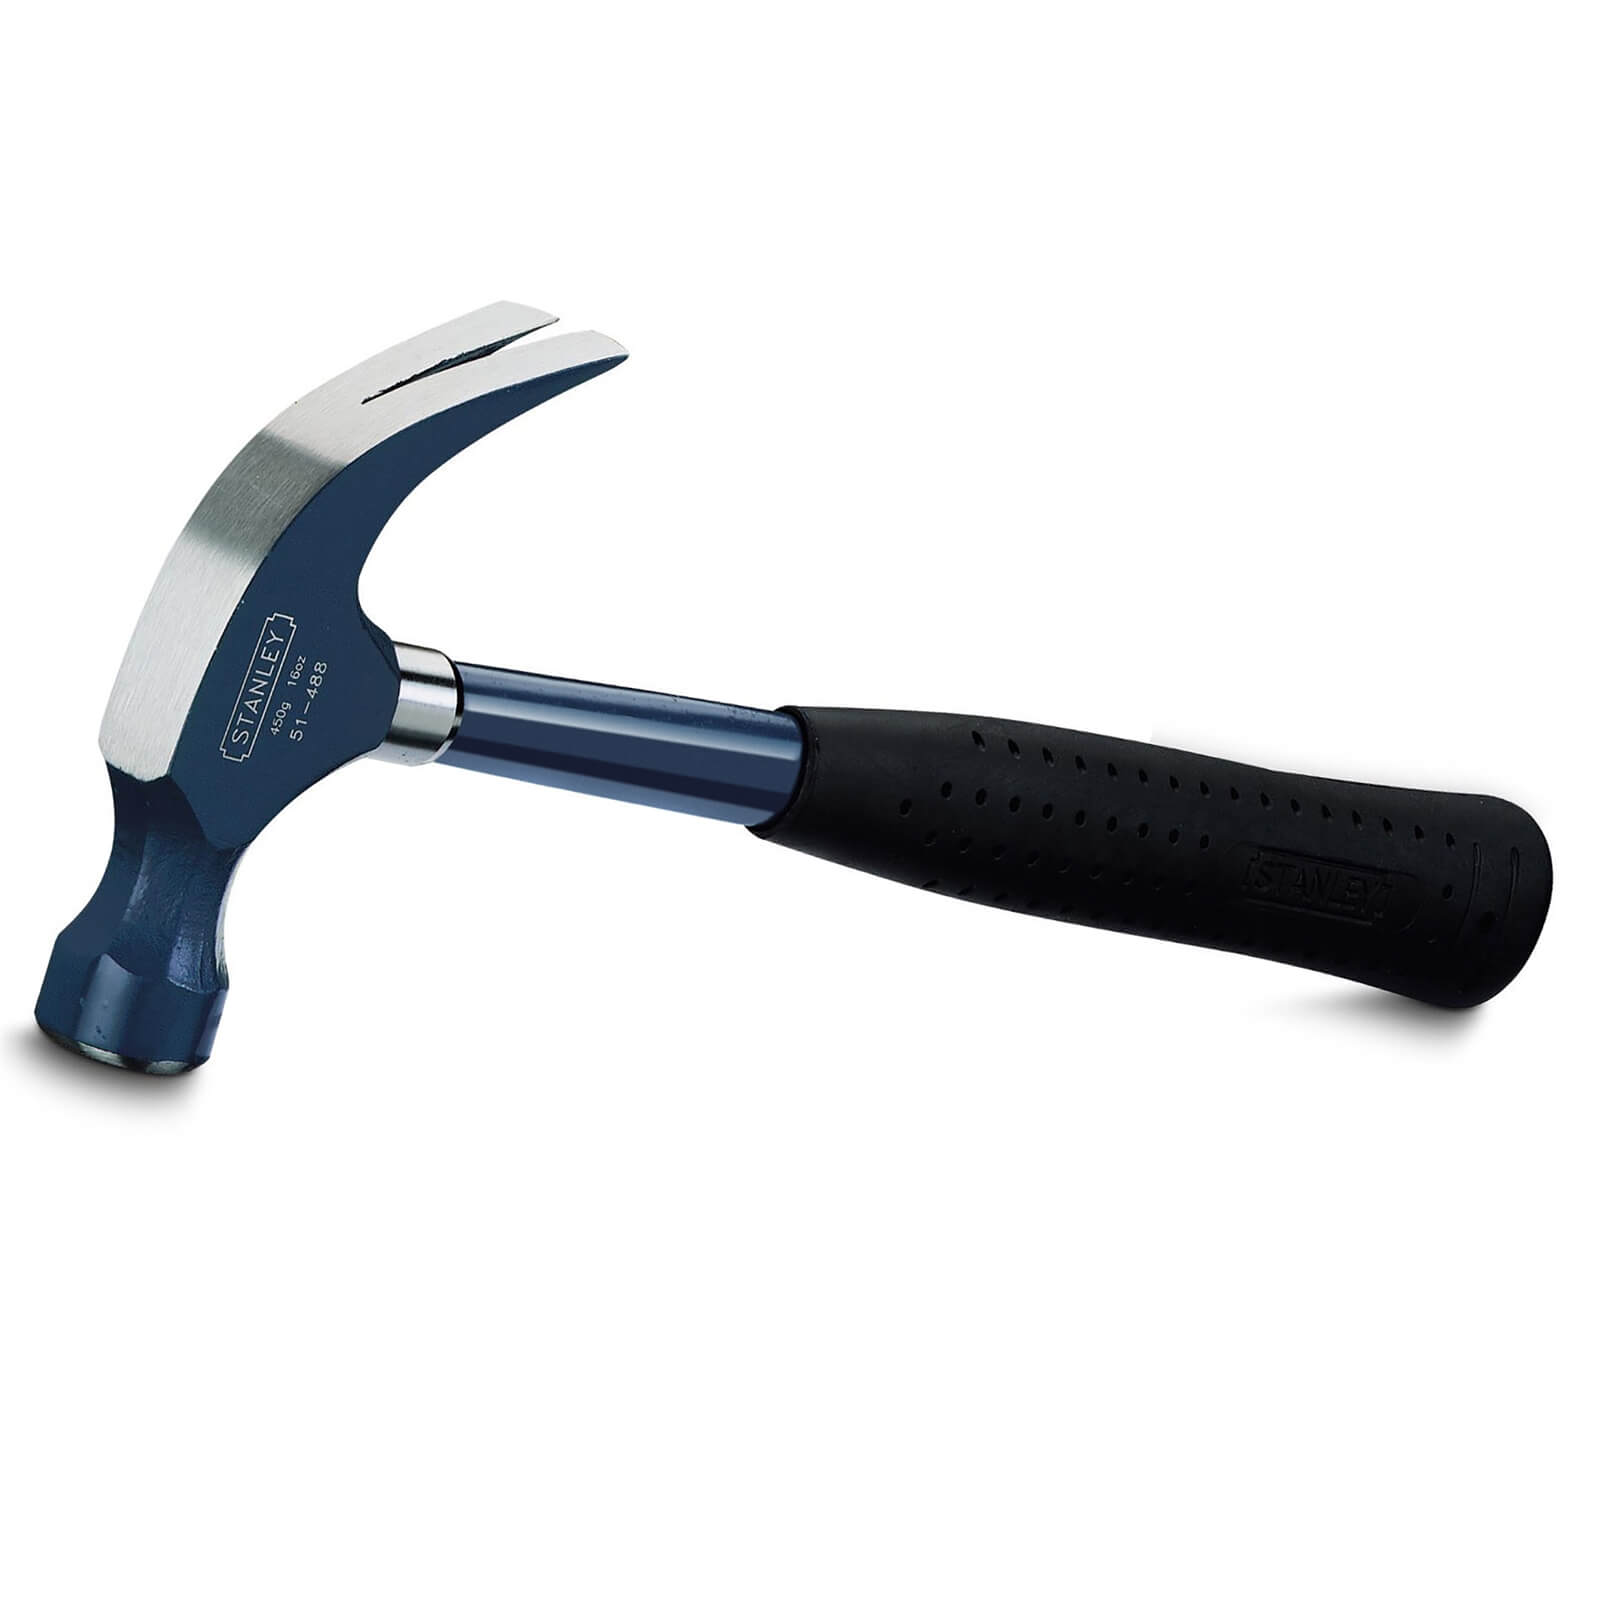 Photo of Stanley 16oz/450g Blue Strike Claw Hammer